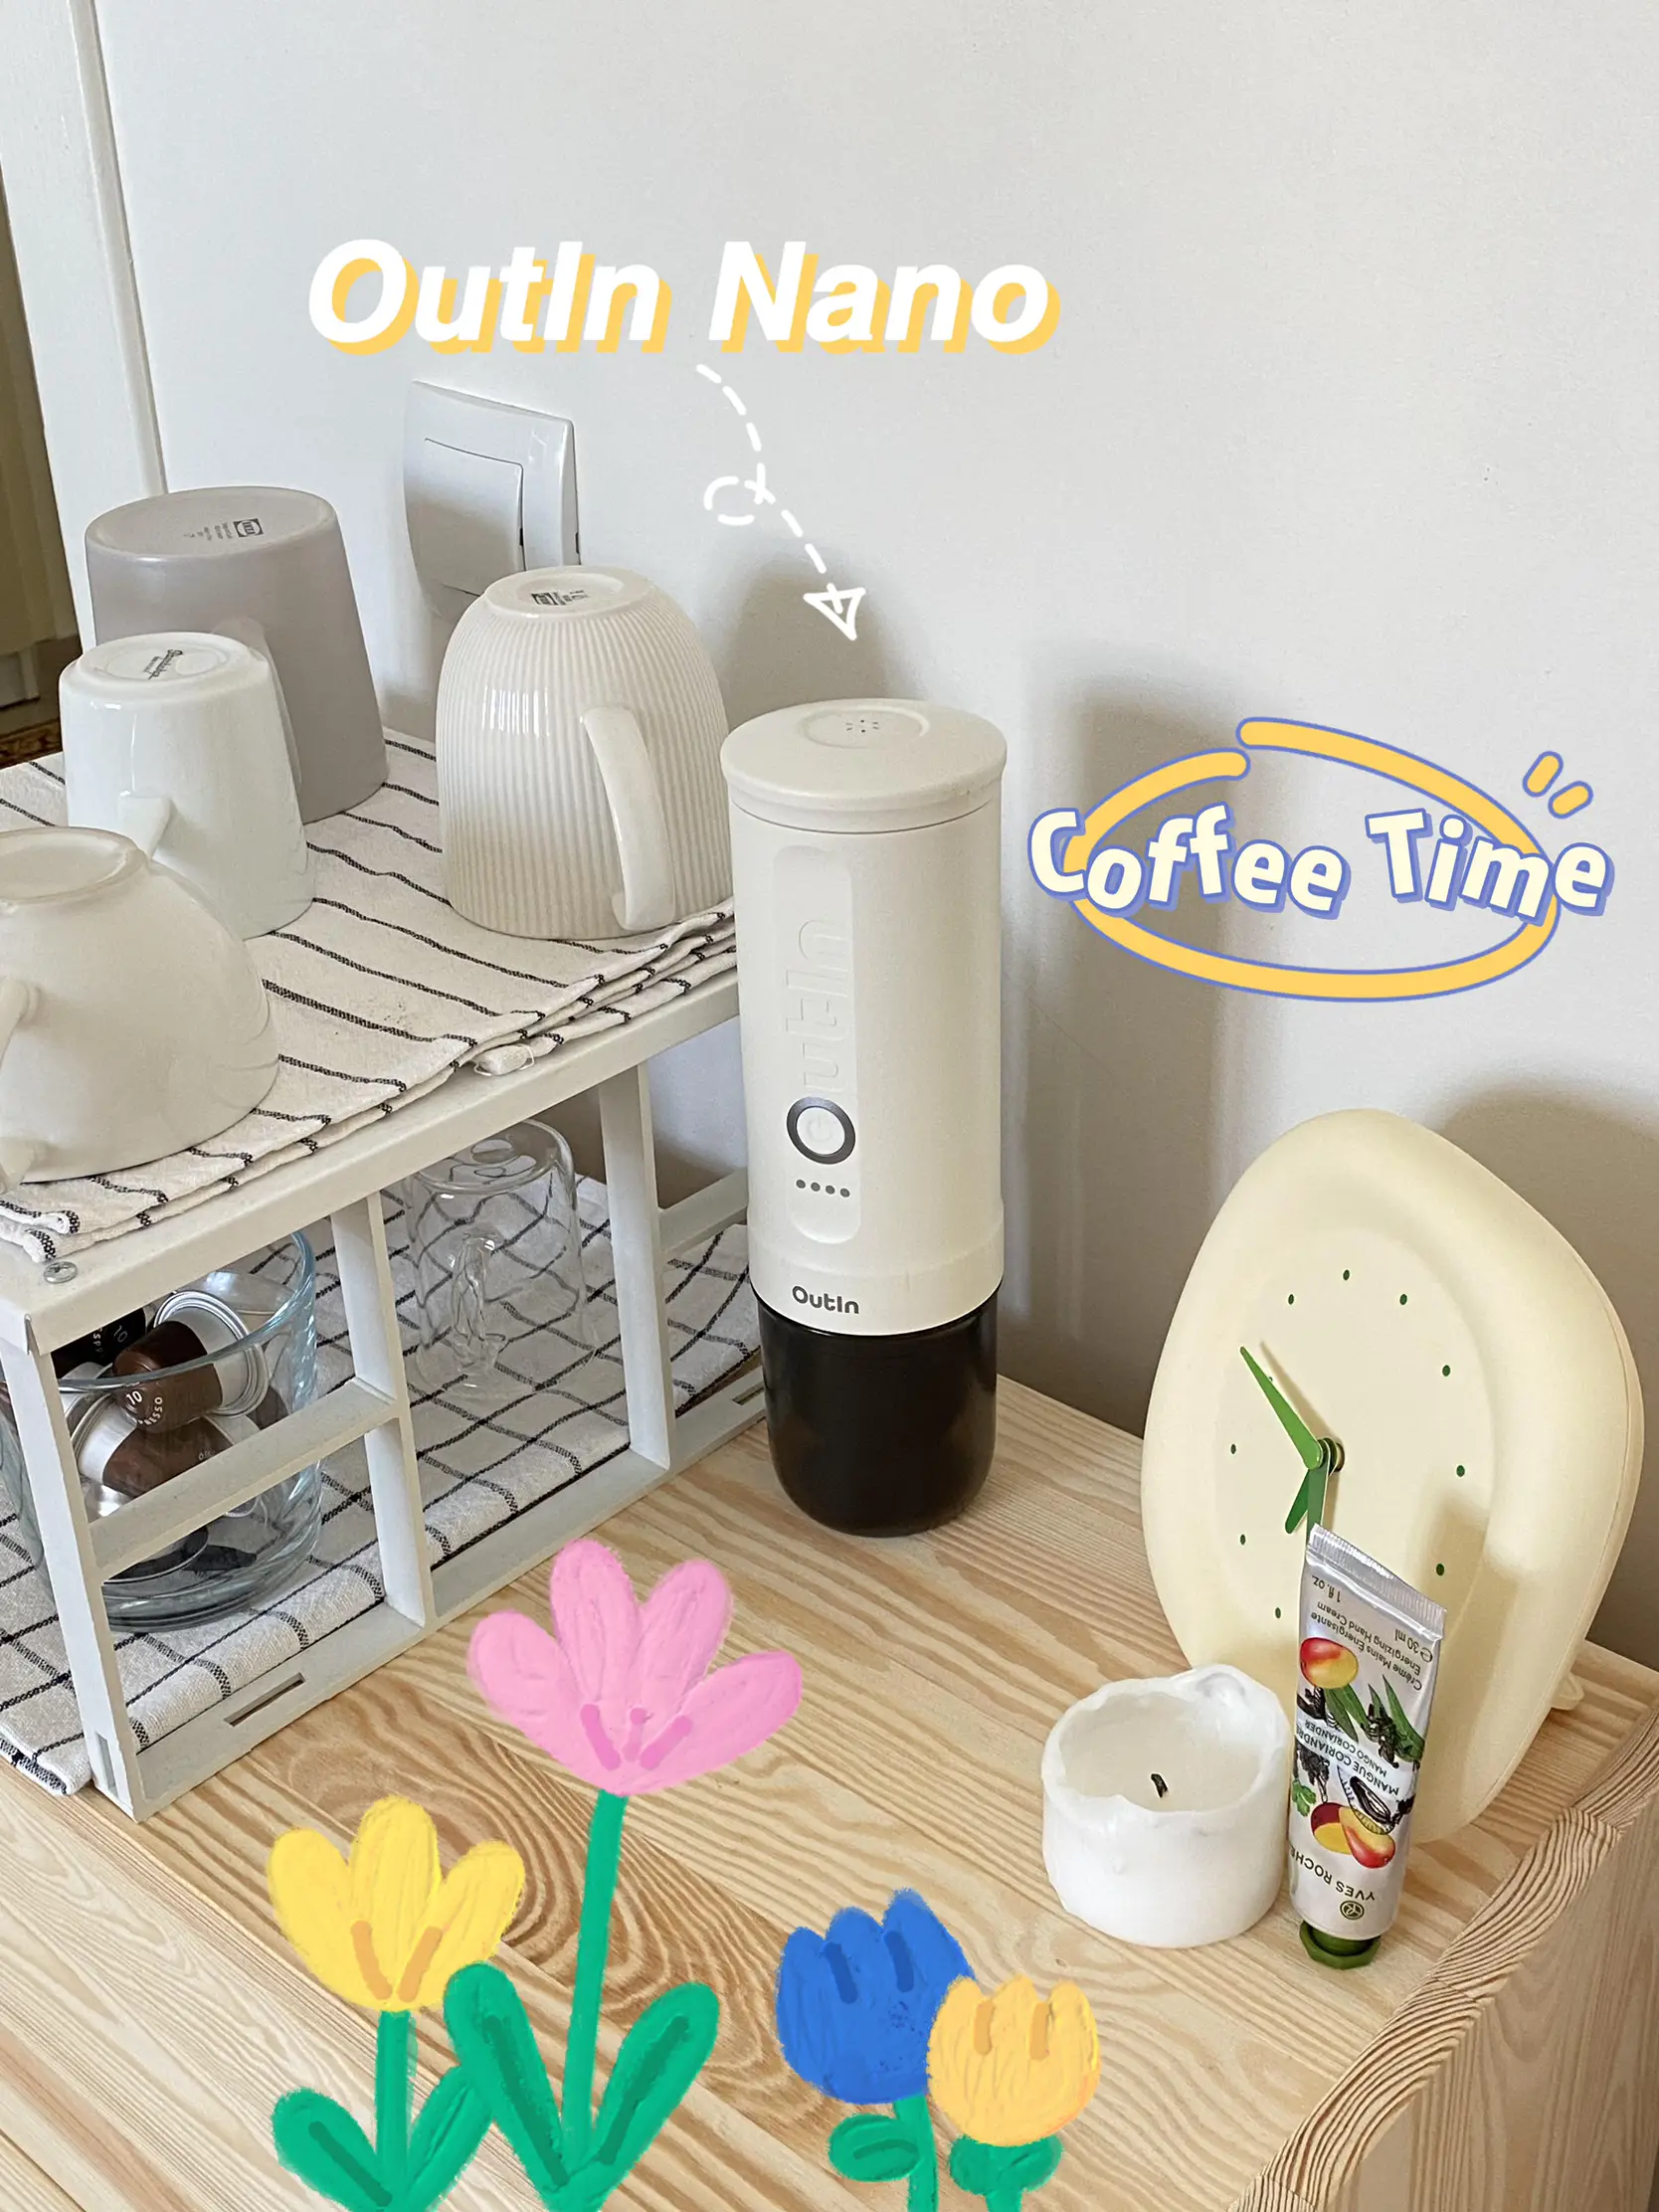 The OUTIN Nano - Portable Espresso Maker Review 